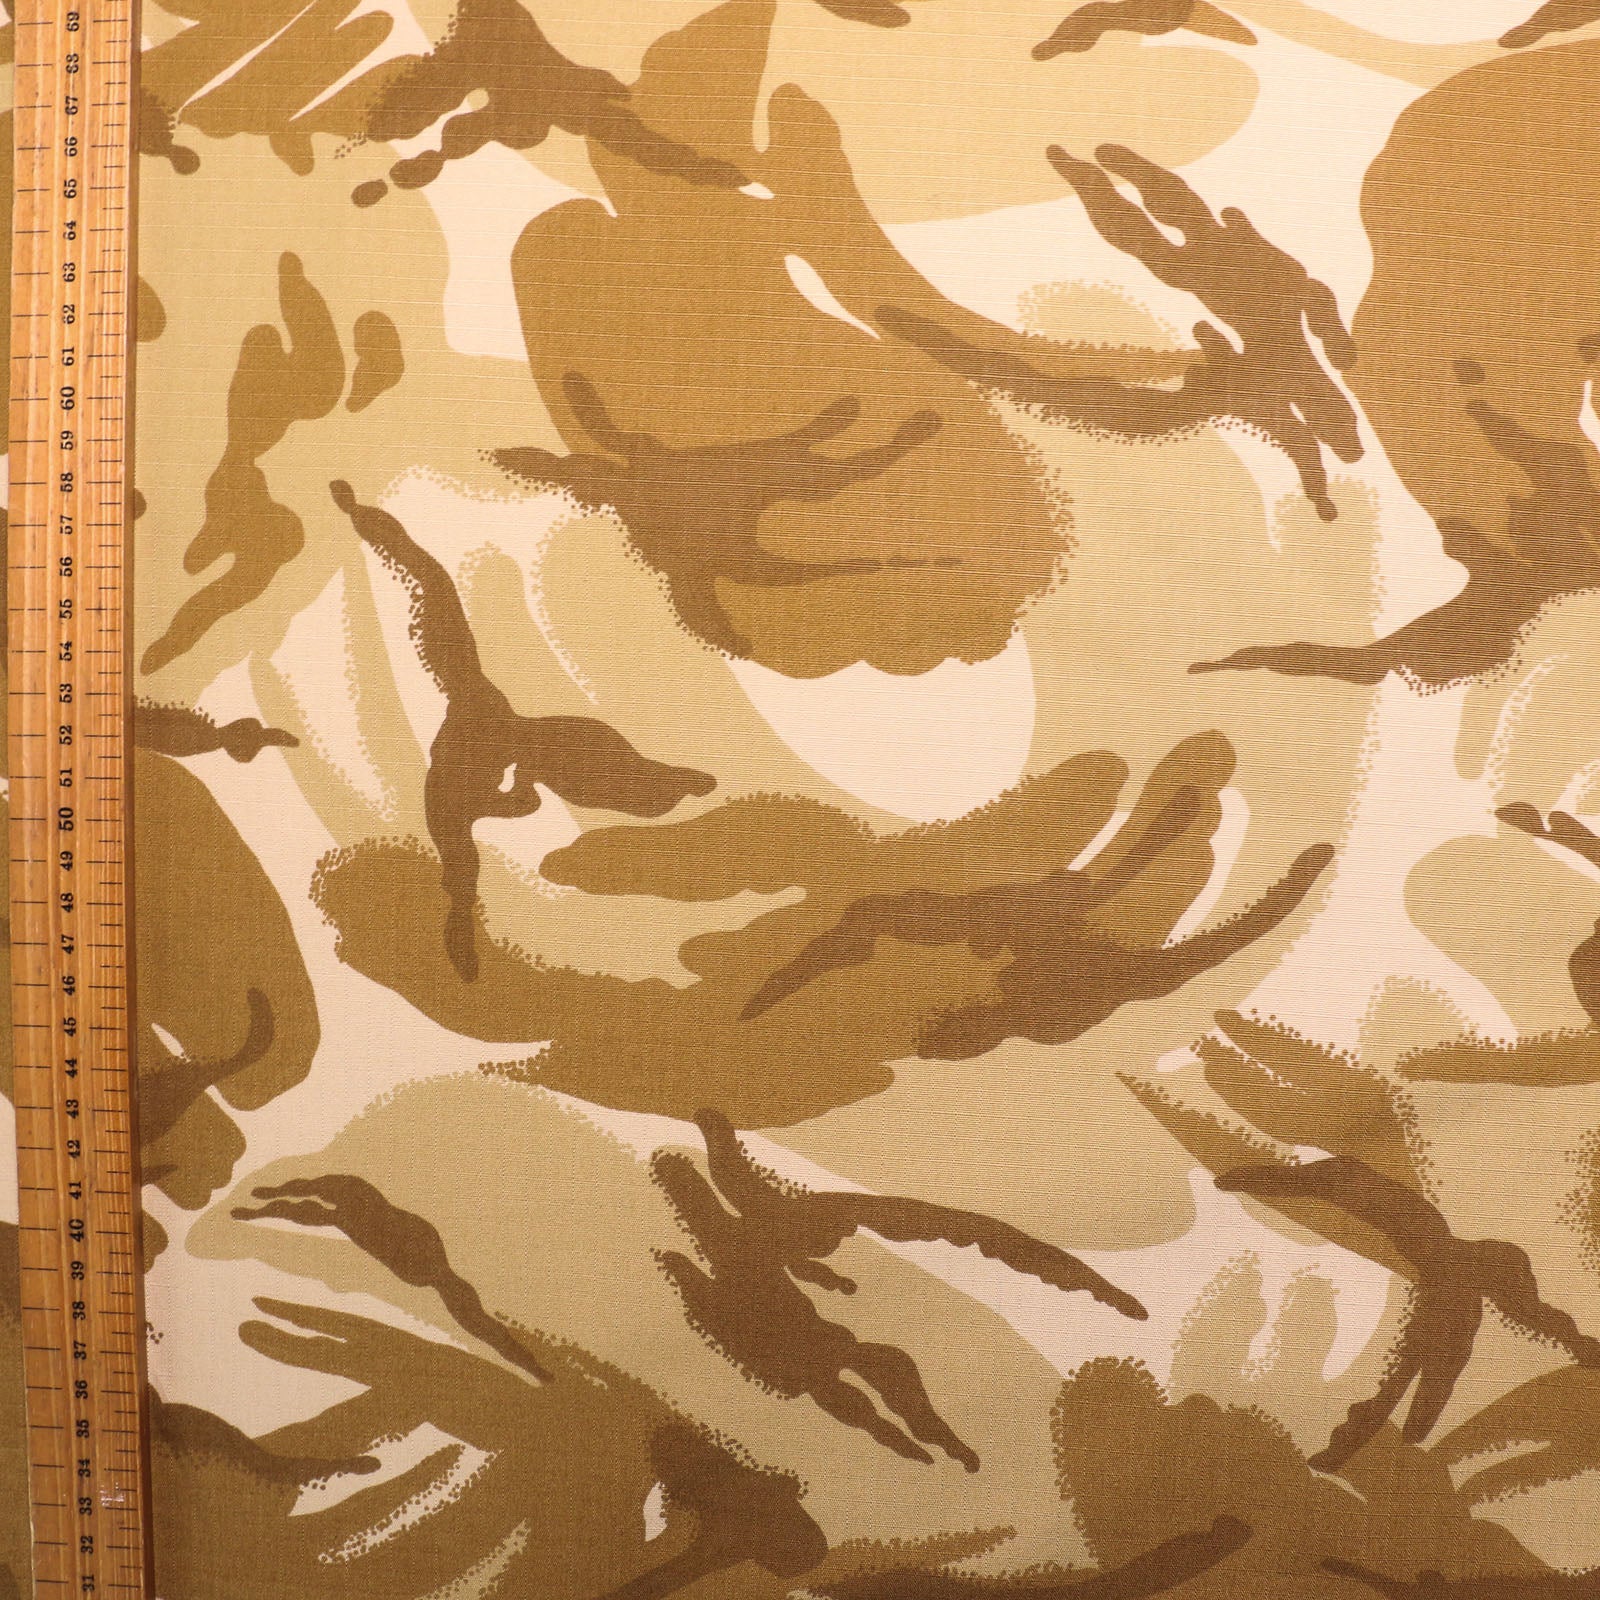 metre multi terrain desert camouflage dressmaking cotton ripstop fabric in cream beige and mustard